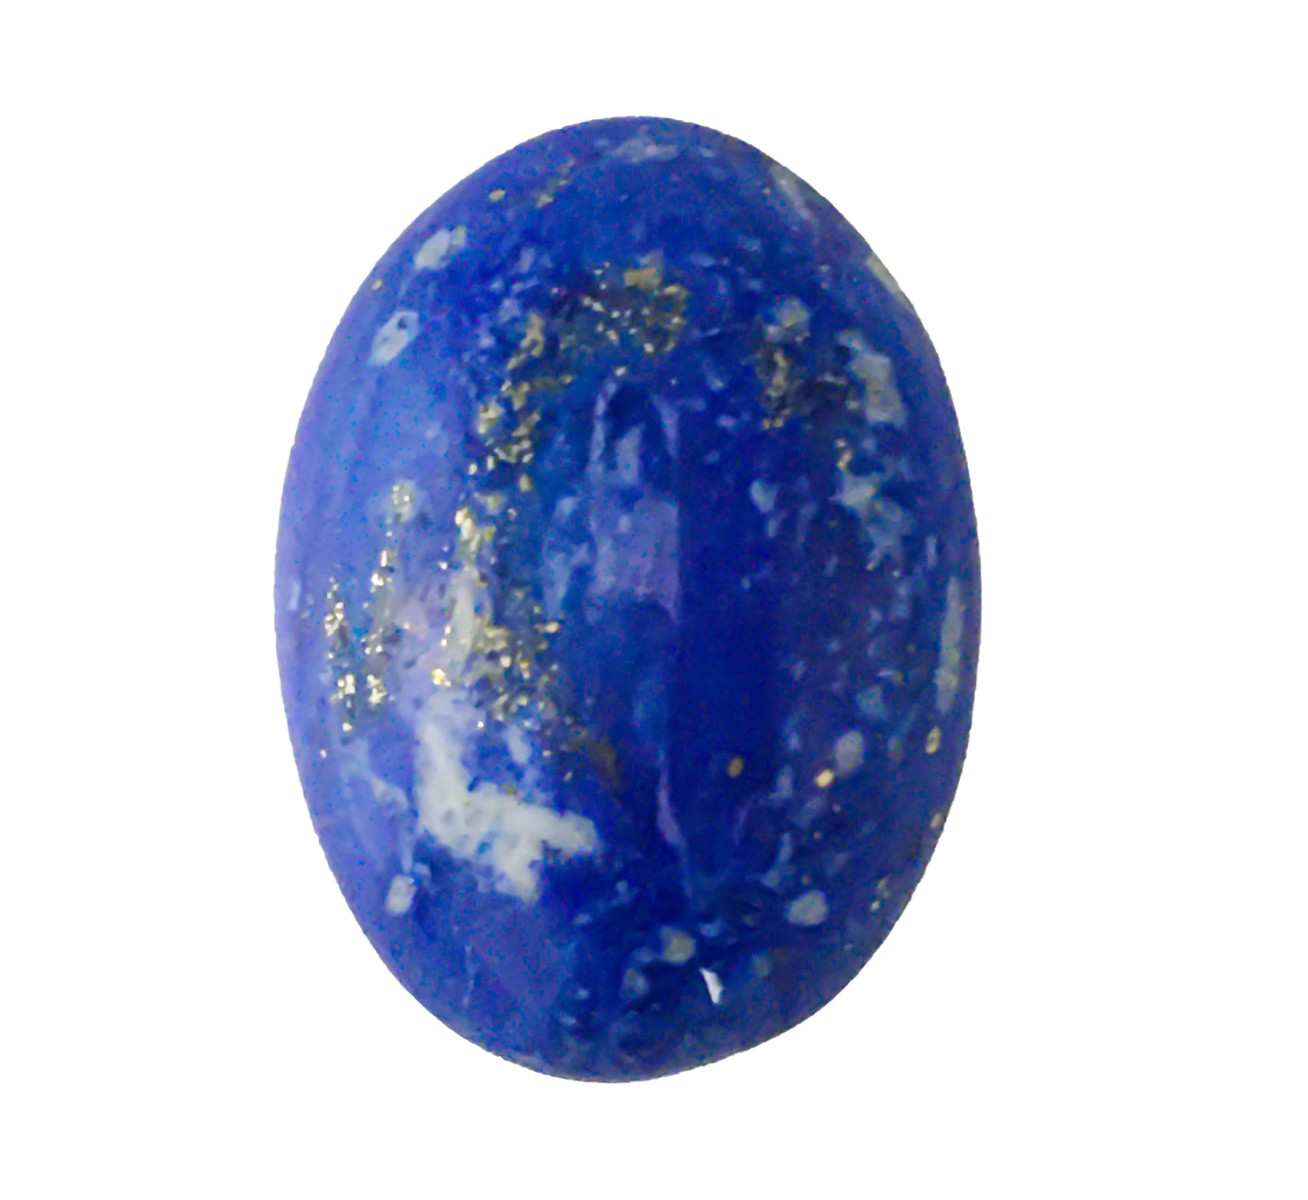 21.5ct Lapis Lazuli Cabochon